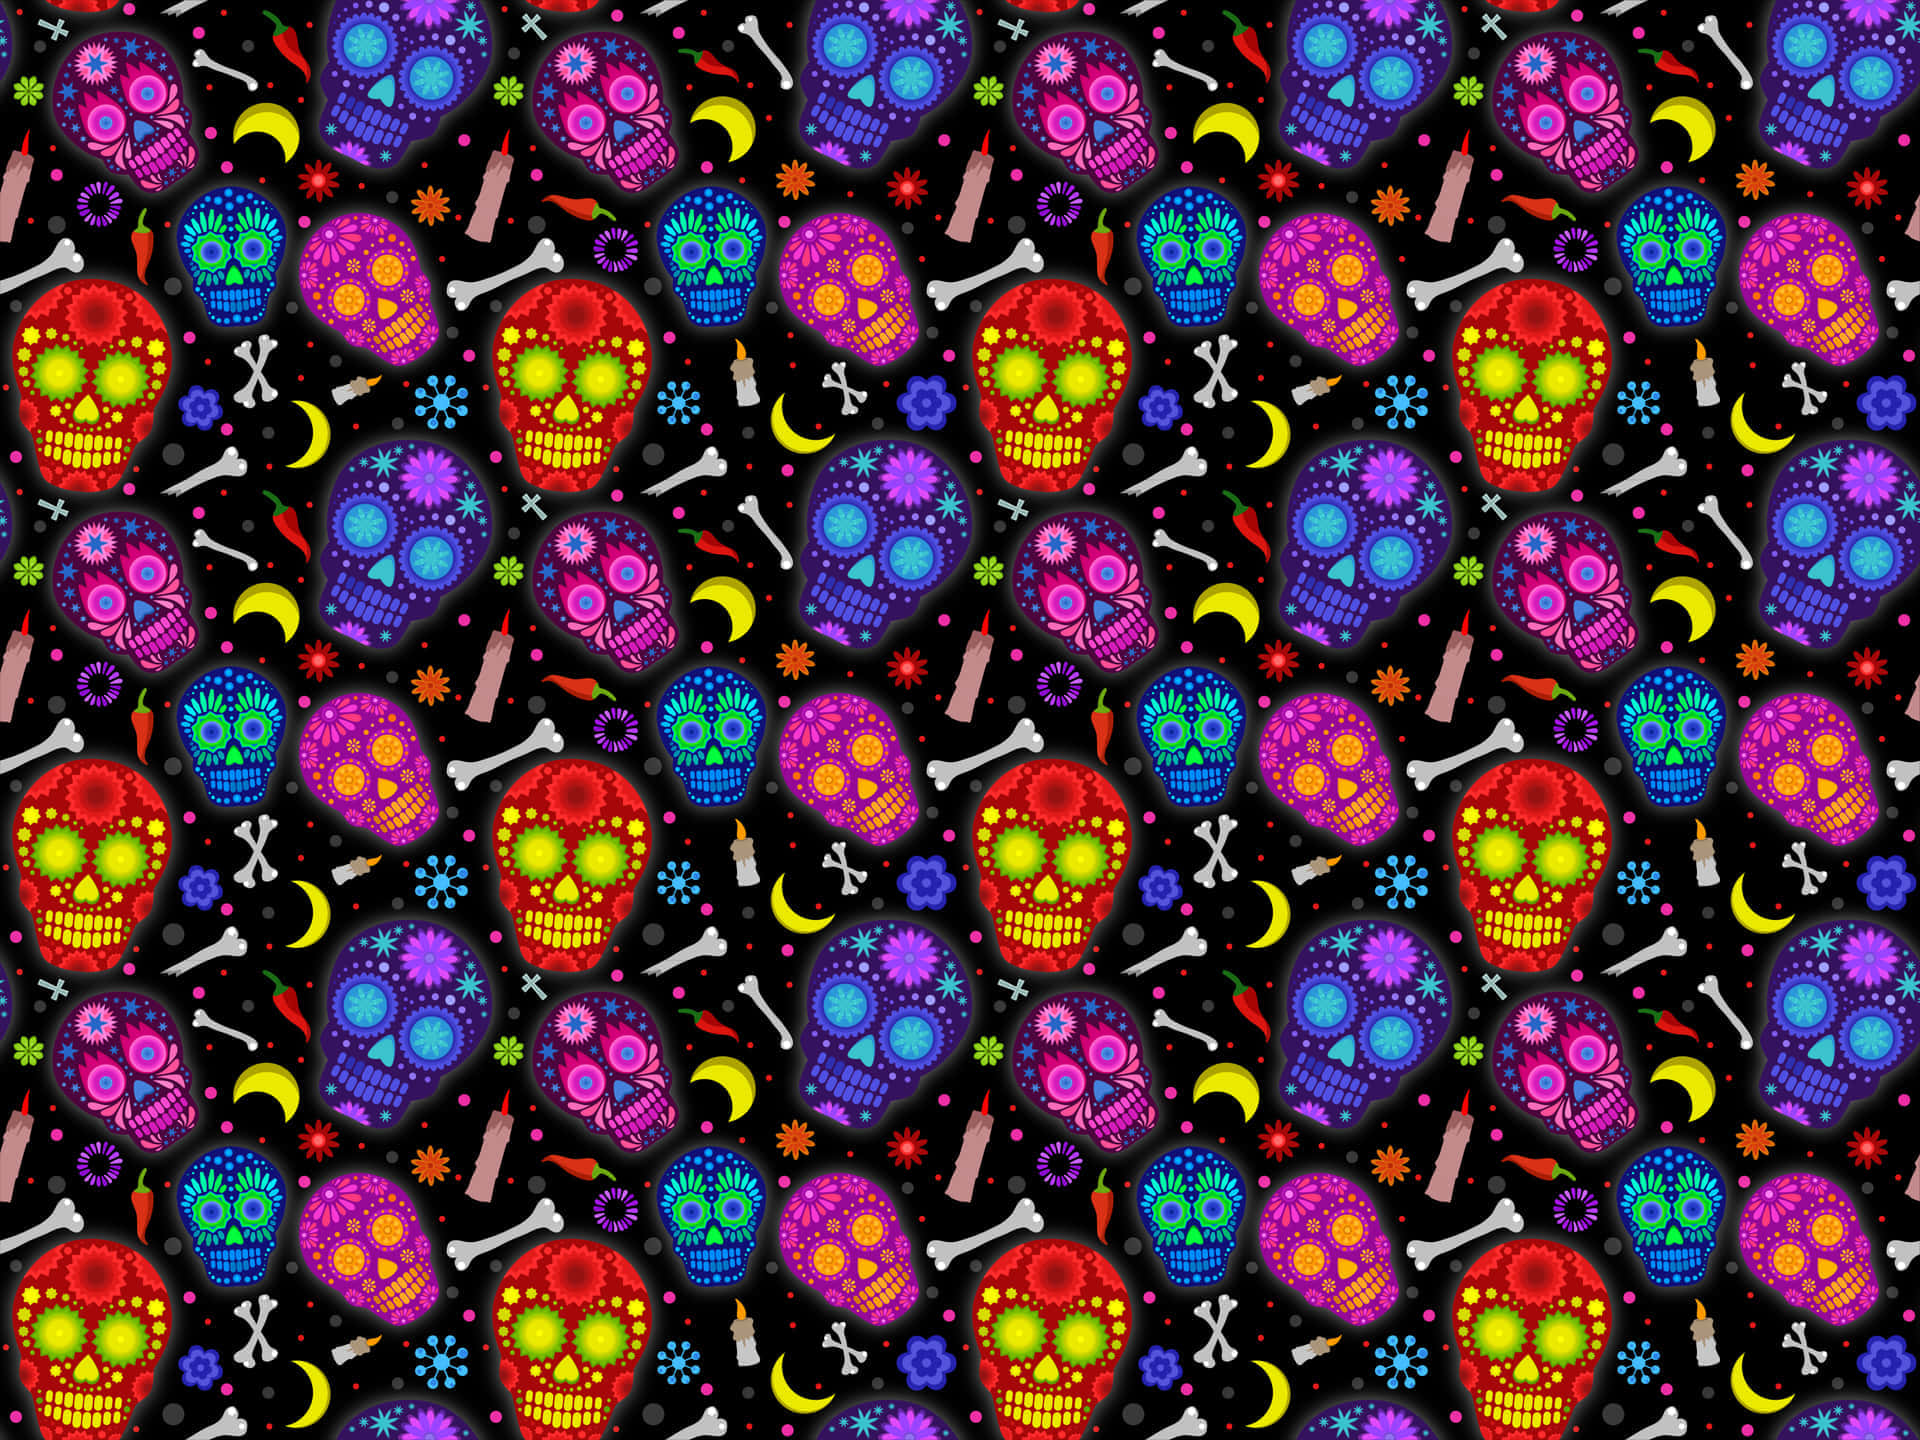 Soft and Colorful Sugar Skull